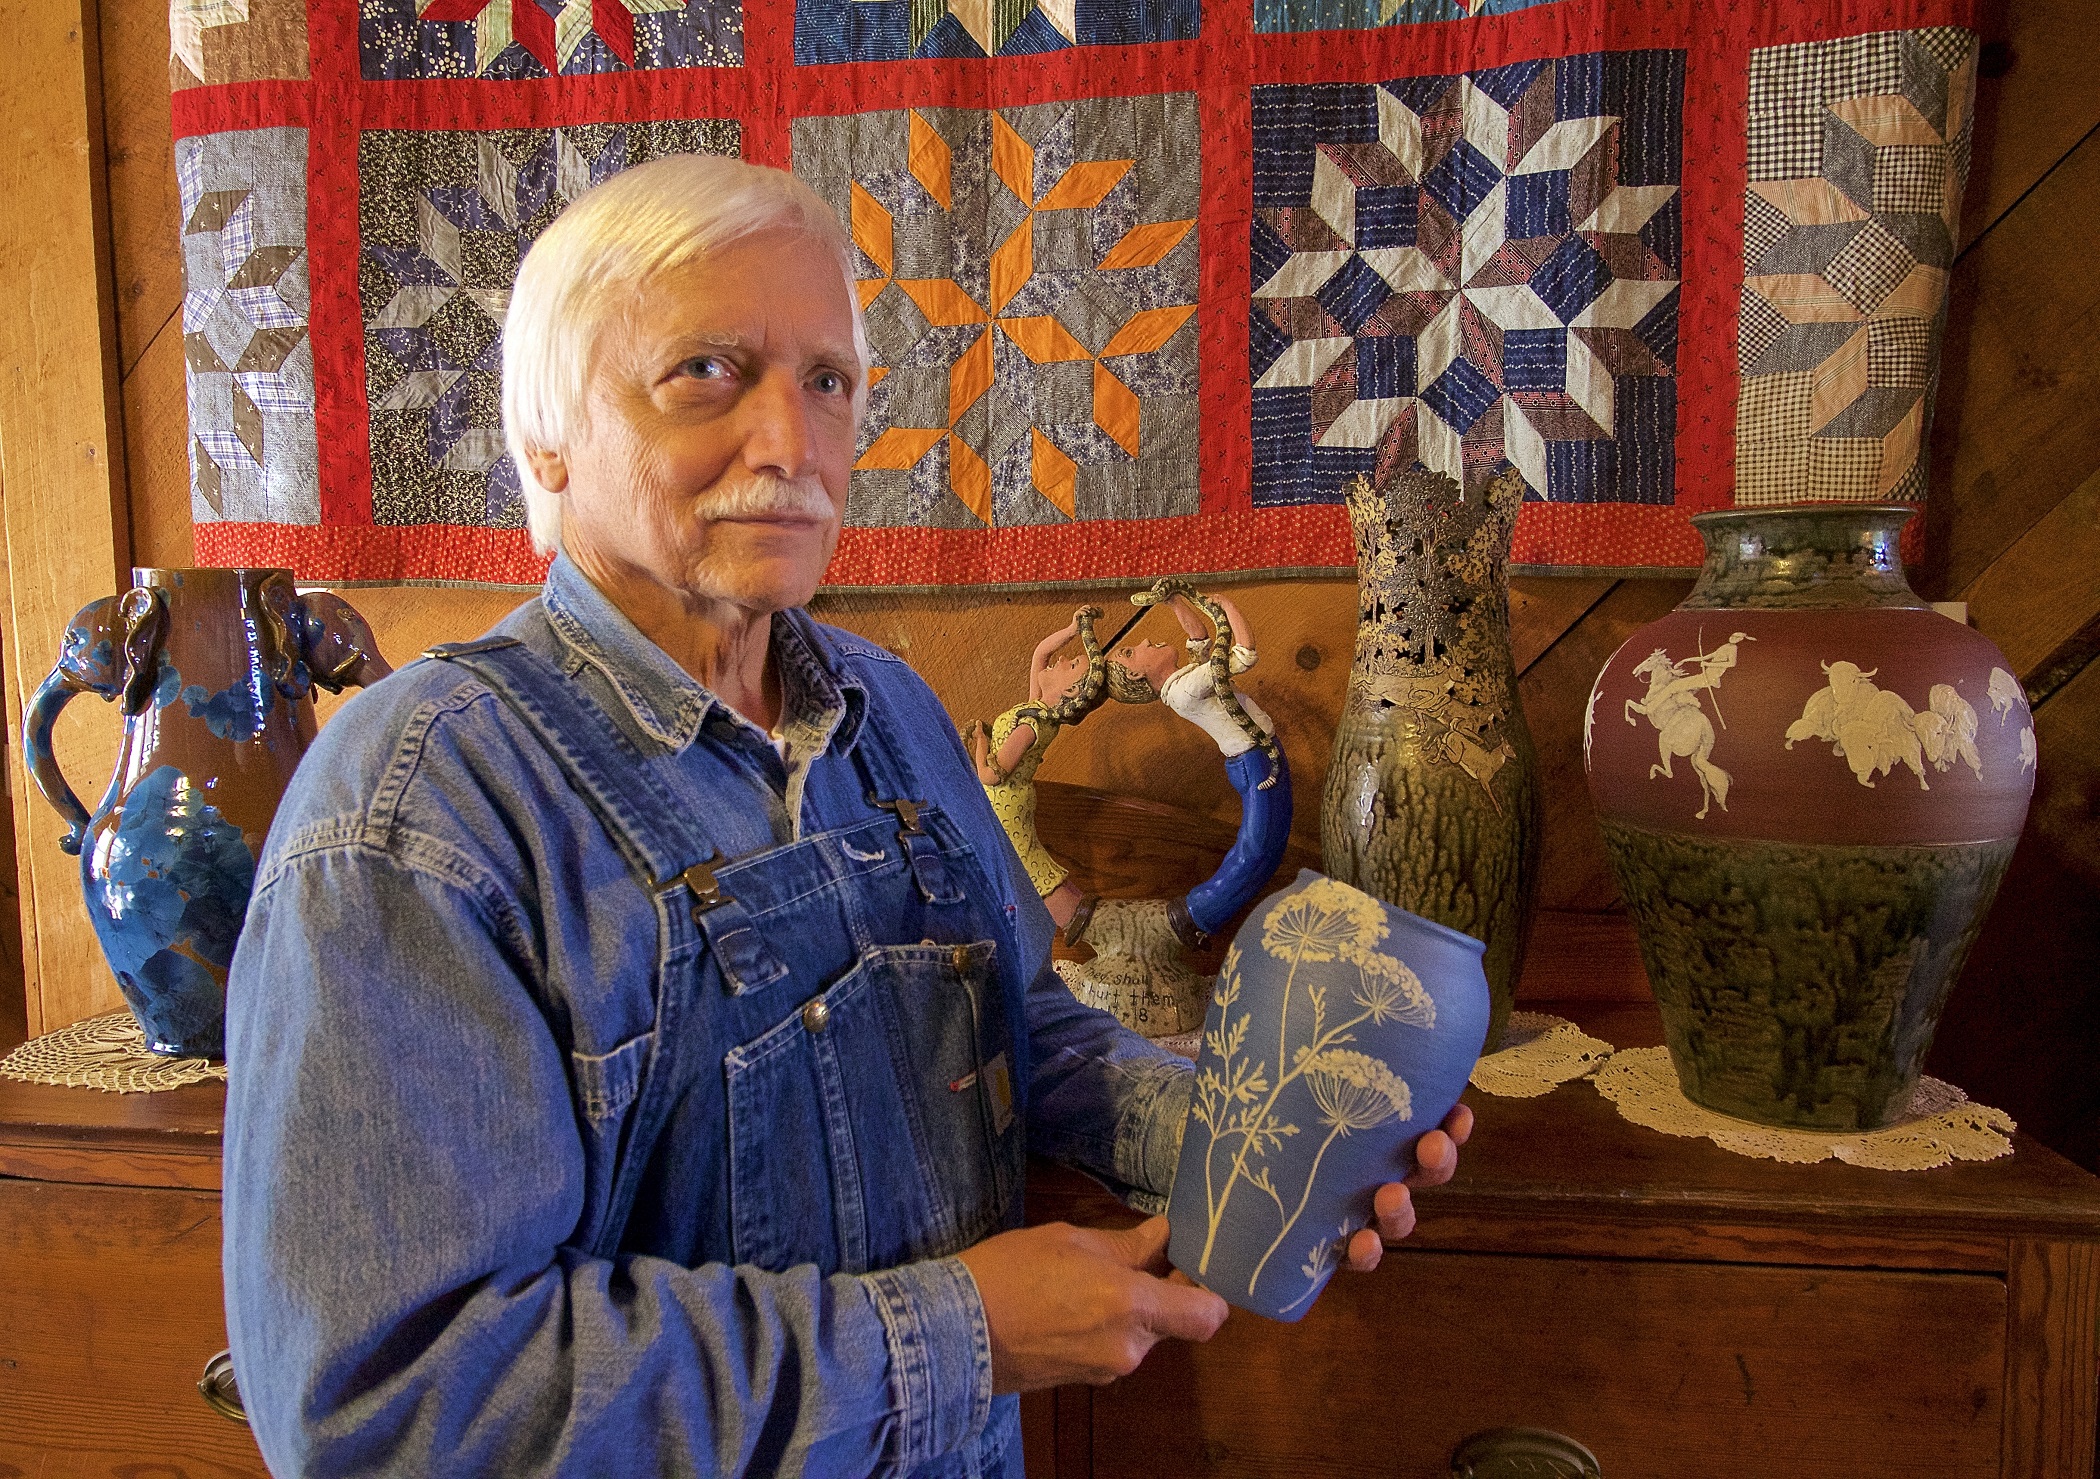 Discover Handmade Art On Blue Ridge Craft Trails